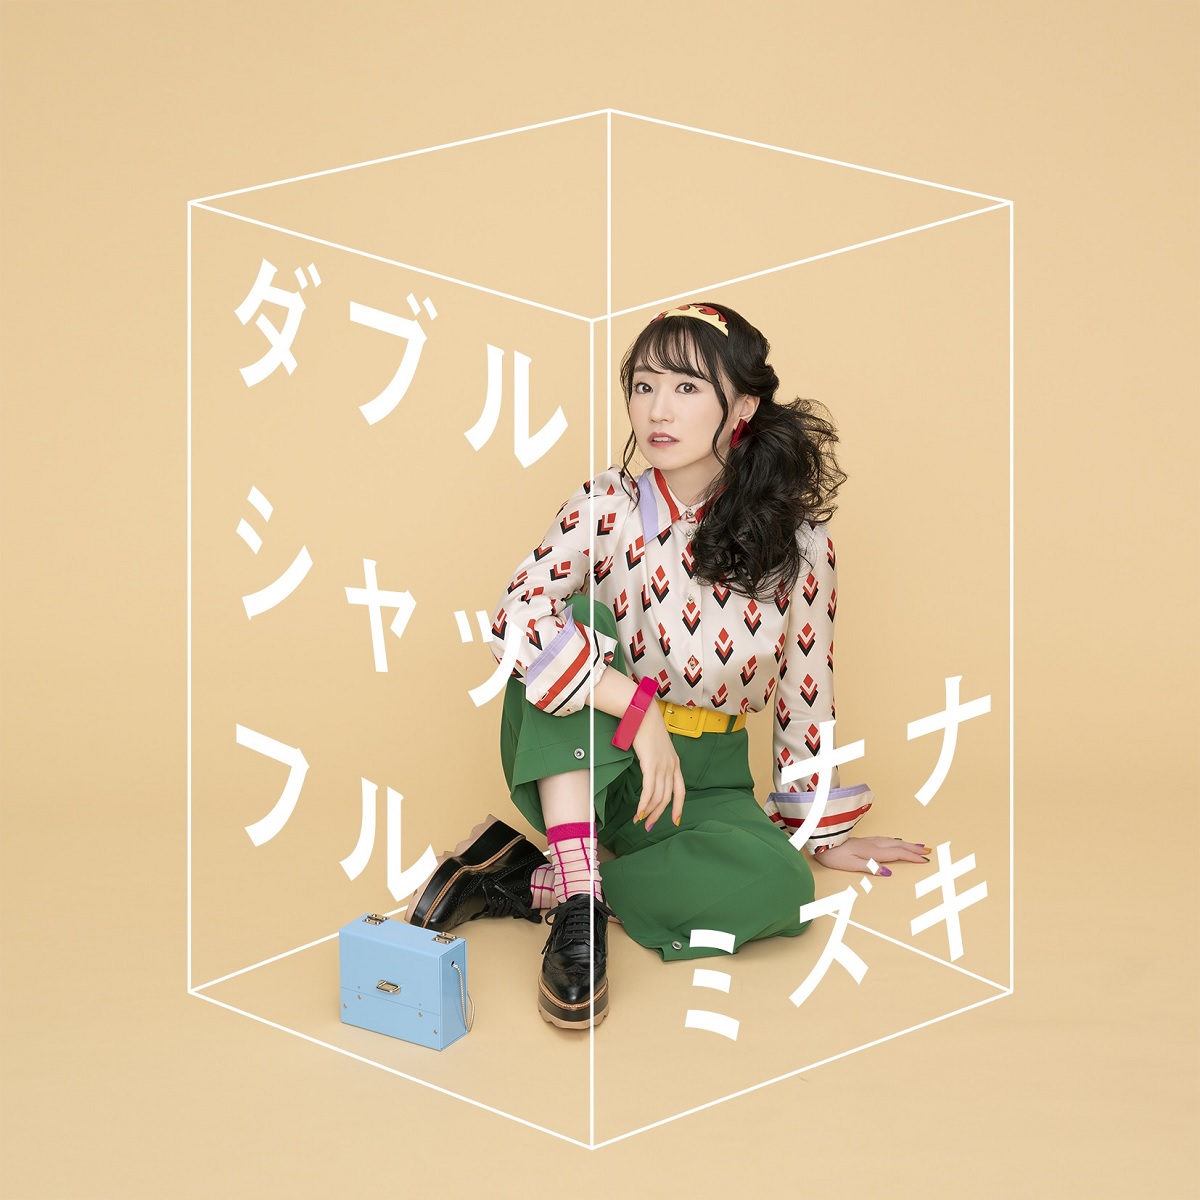 Cover art for『Nana Mizuki - ダブルシャッフル』from the release『Double Shuffle